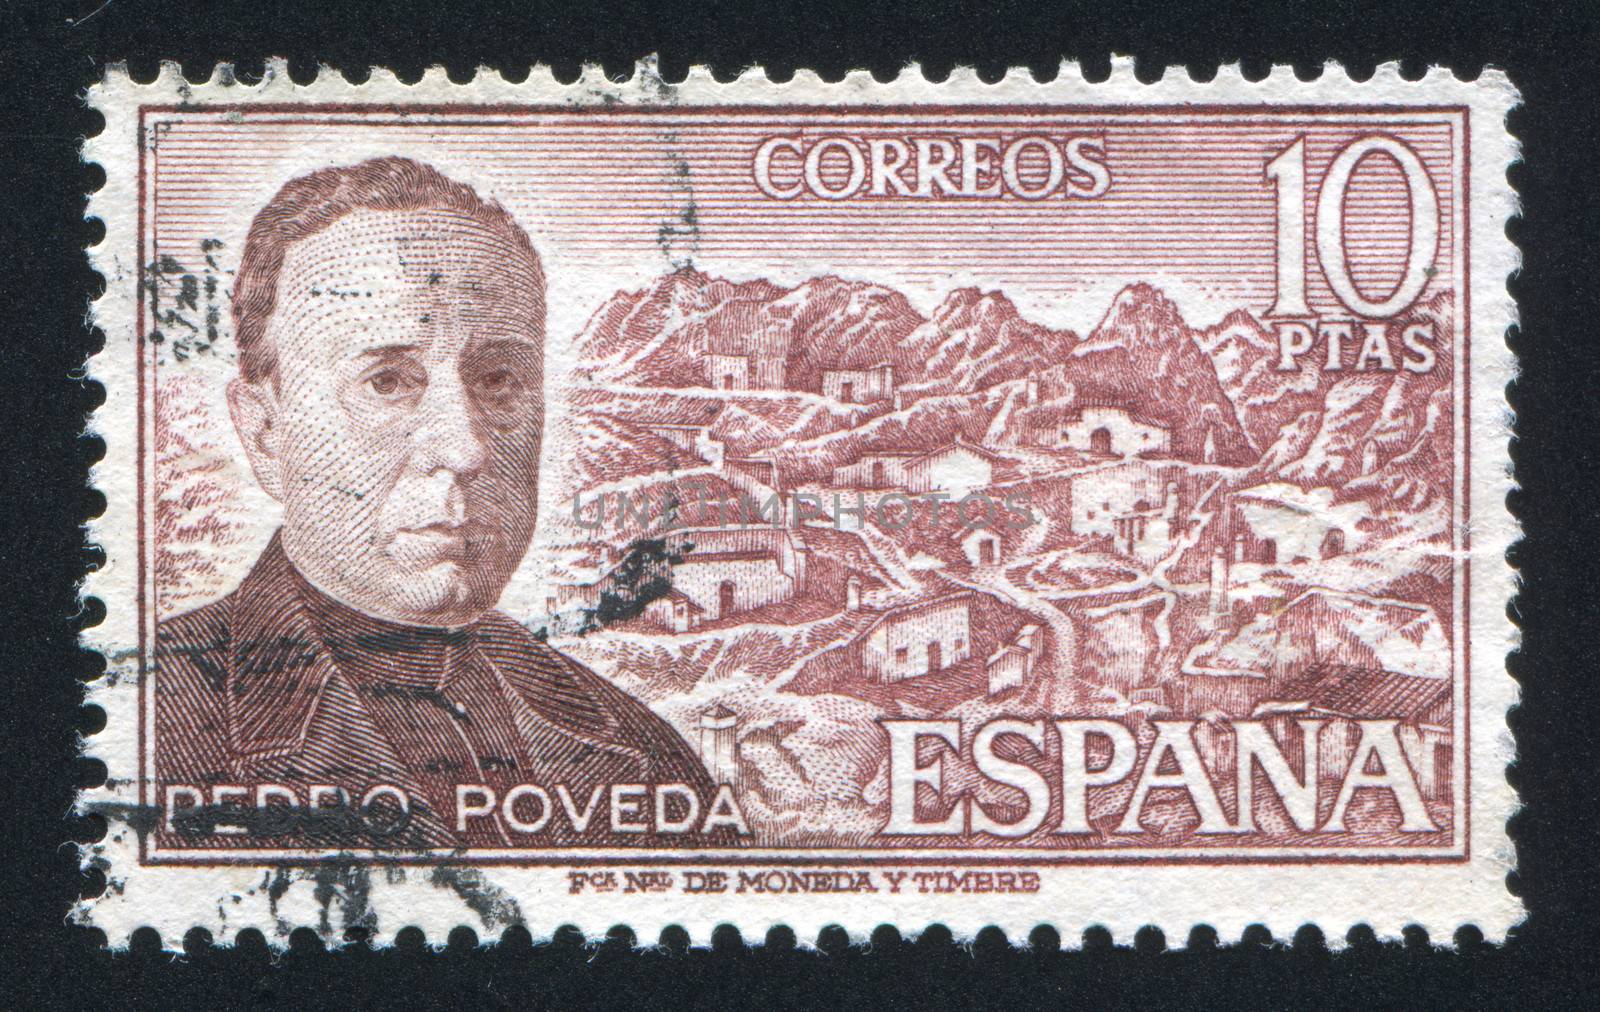 SPAIN - CIRCA 1974: stamp printed by Spain, shows Father Pedro Poveda, circa 1974